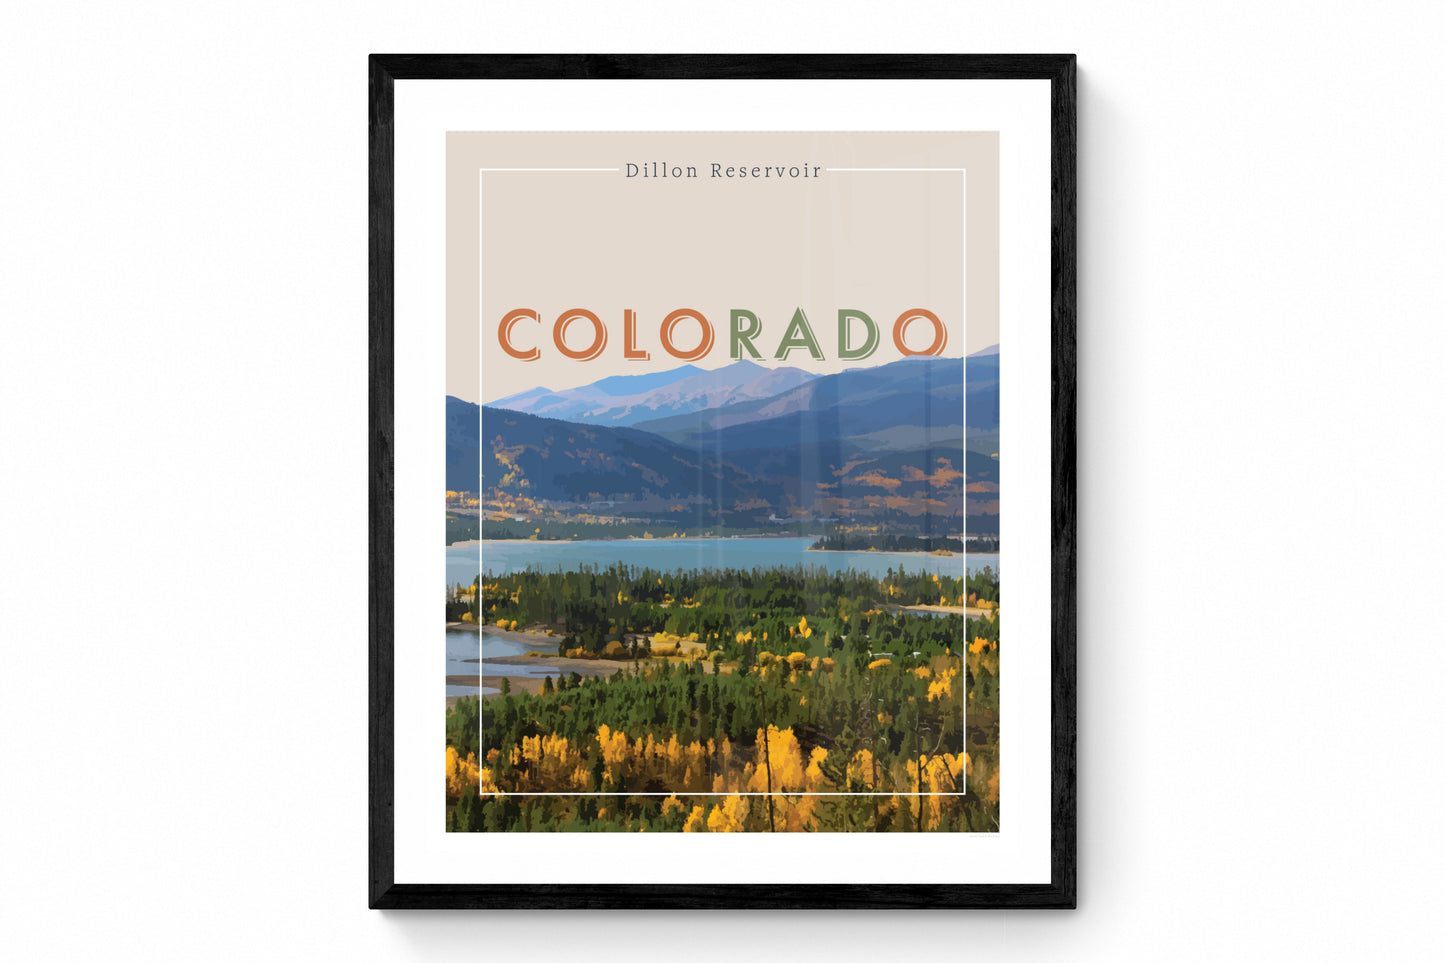 coloRADo - Dillon Reservoir, Wall Art, Print Only (No Frame) - Vertical